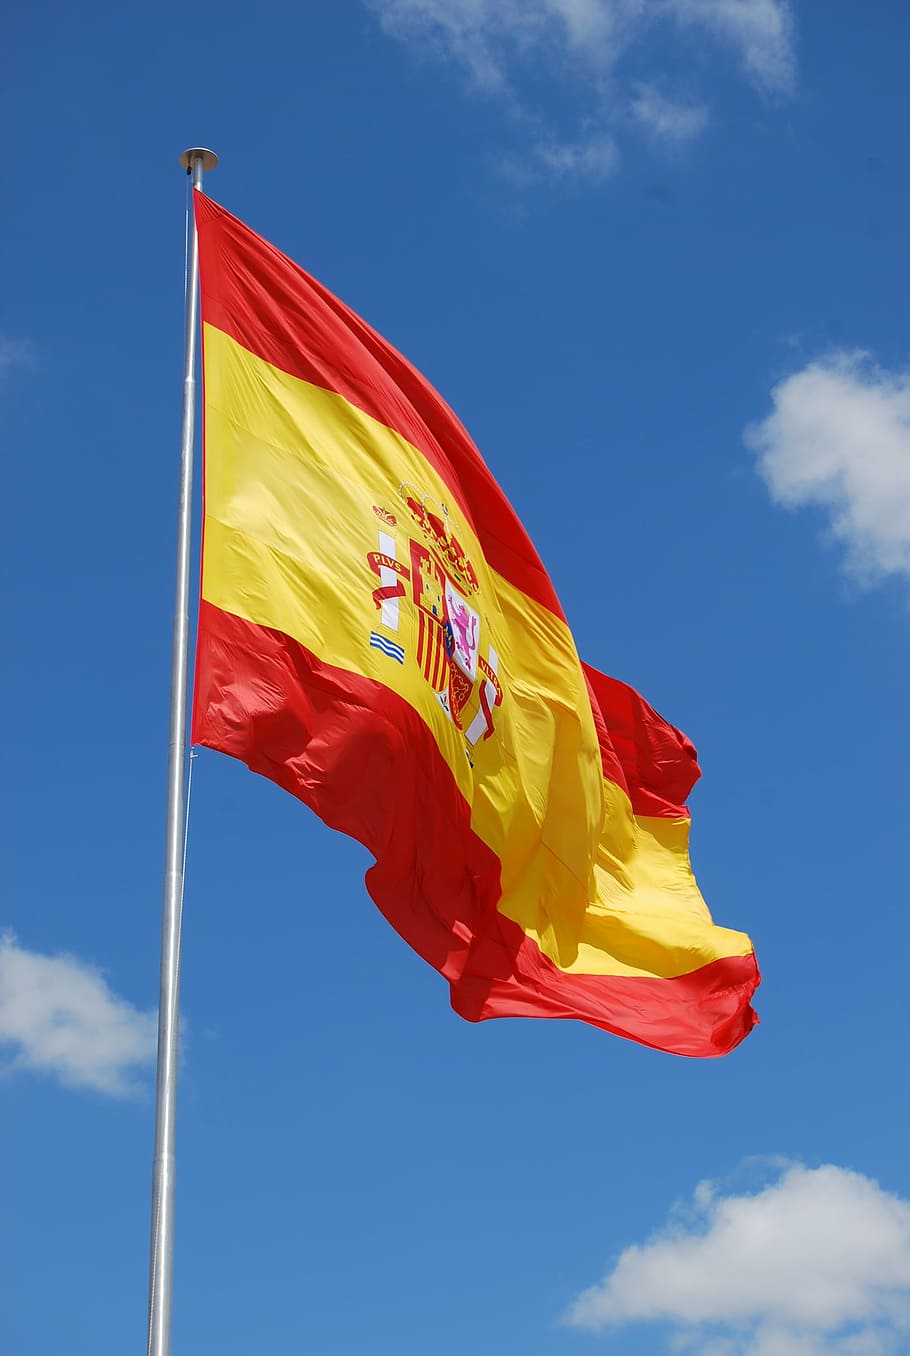 spain flag, white, pole, daytime, spain, spanish, flag, country, patriotism, red